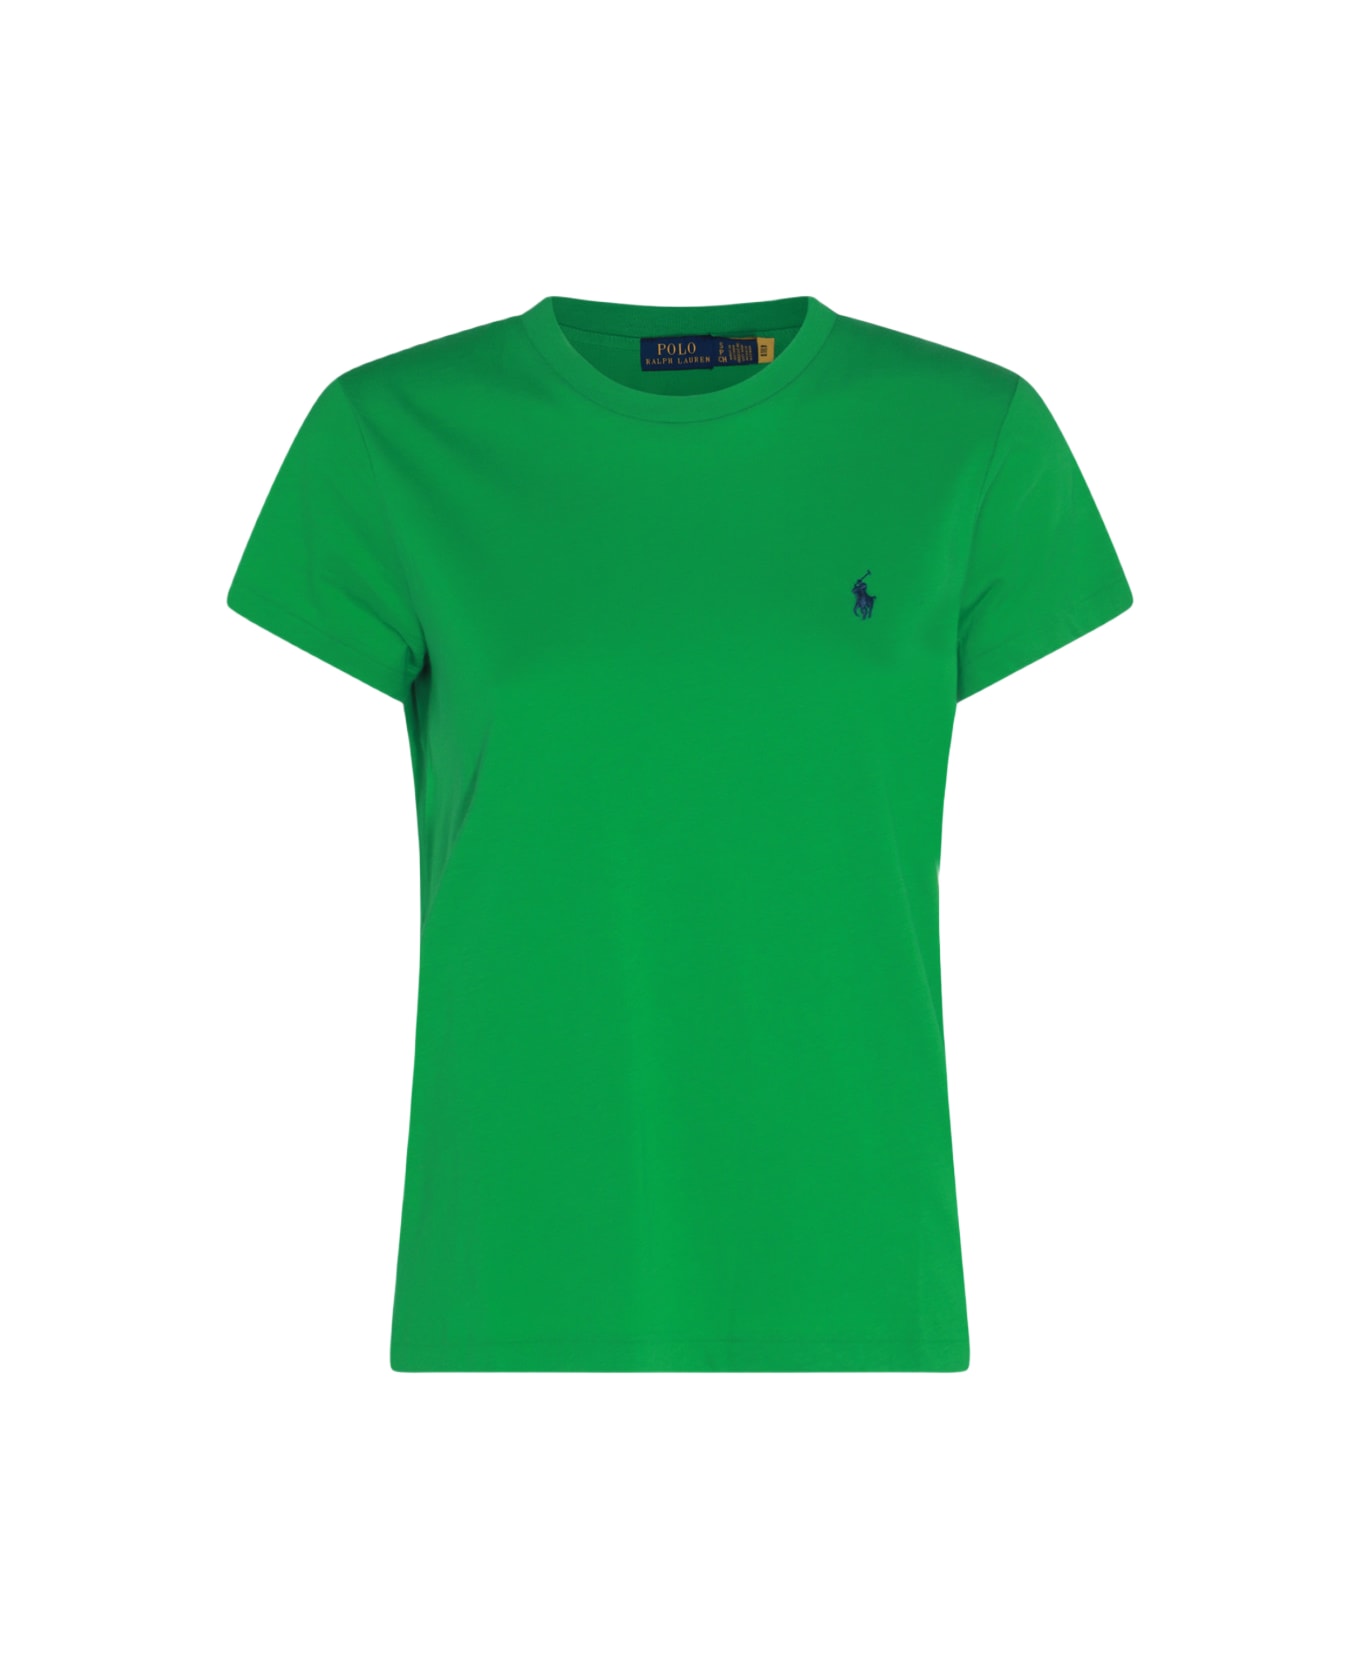 Polo Ralph Lauren Pony T-shirt - Green Tシャツ